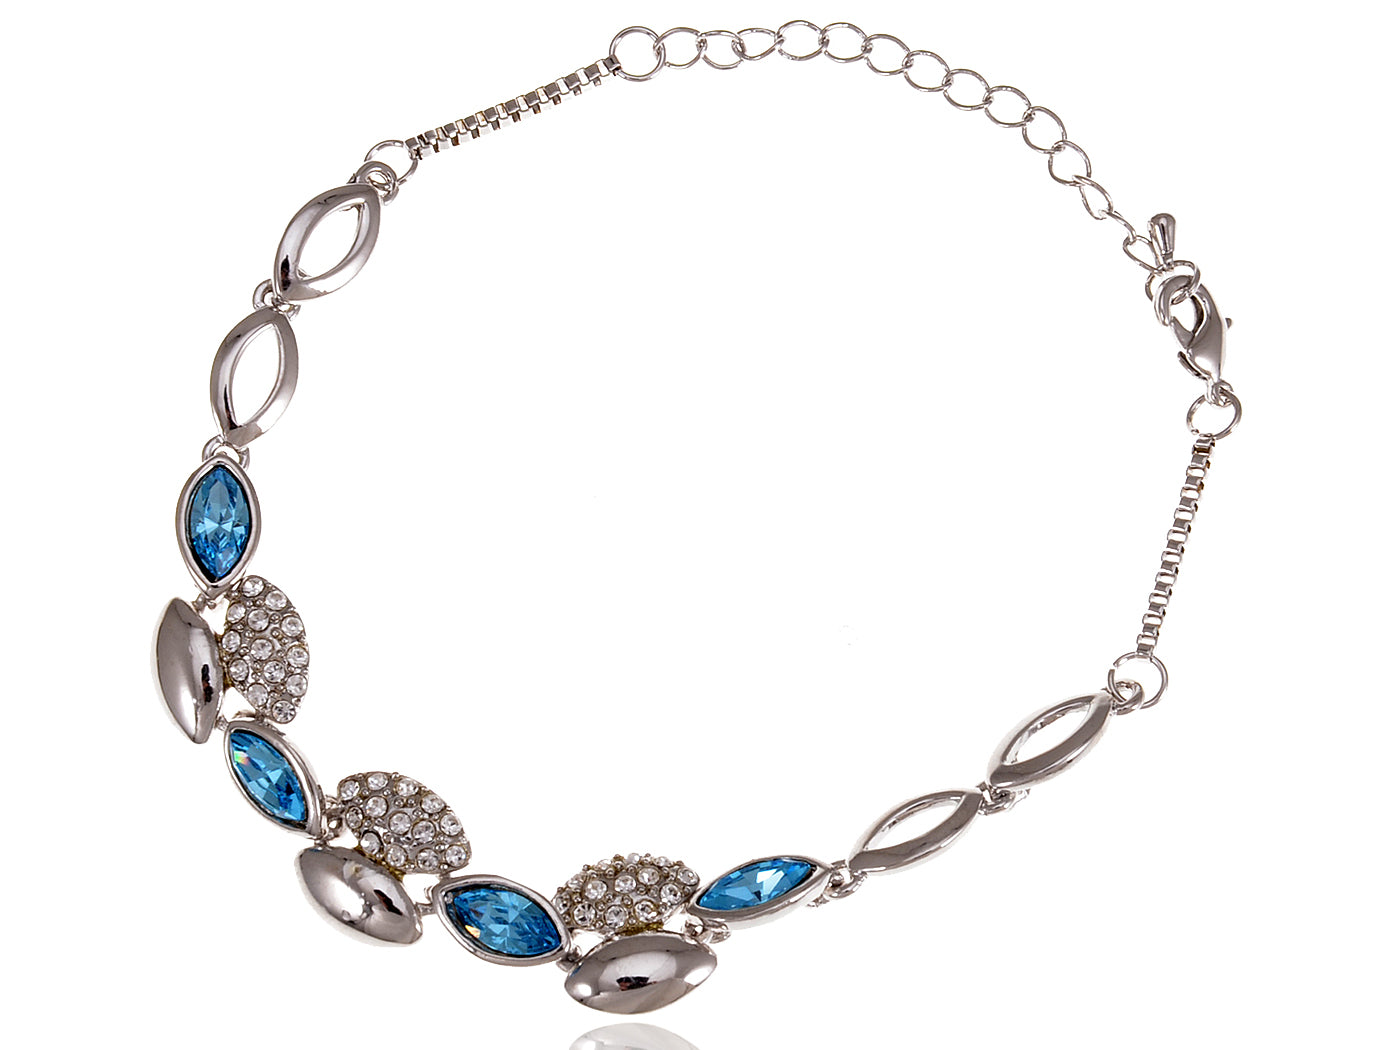 Swarovski Crystal Elements Aquamarine Blue Teardrop Leaves Link Bracelet